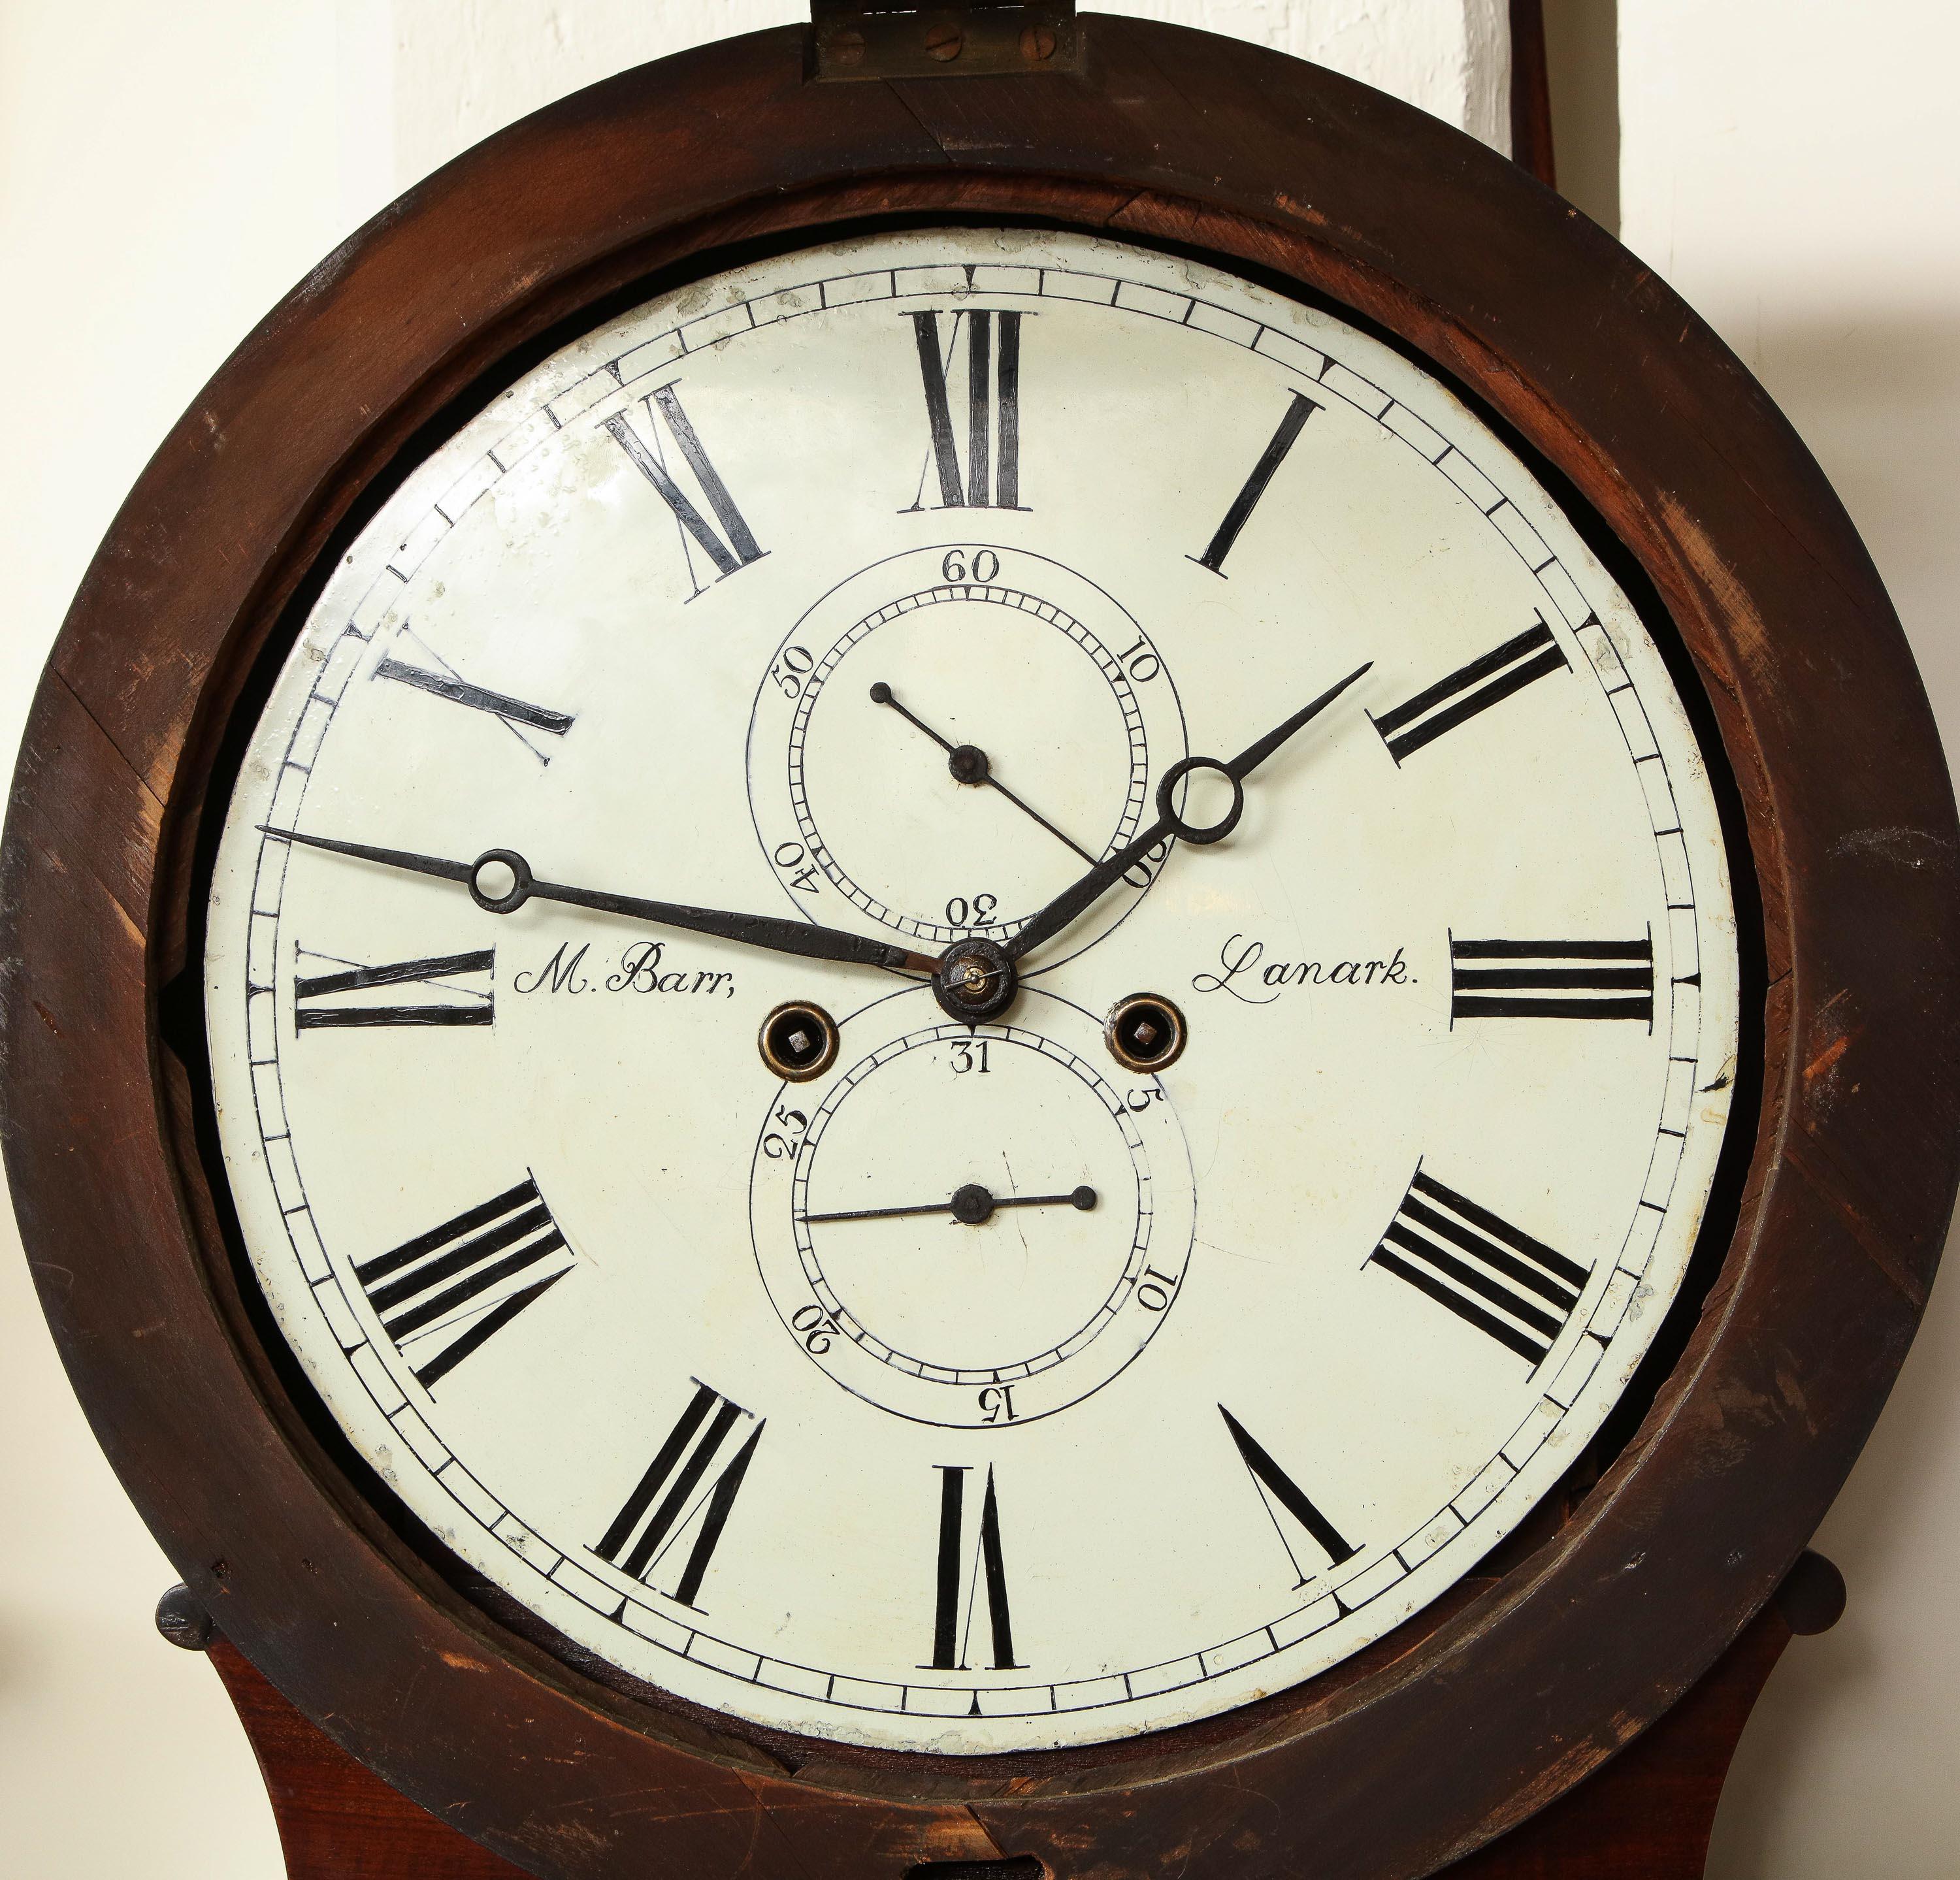 Exceptional Scottish Clock by M. Barr of Lanark Circa 1840- -1850 4